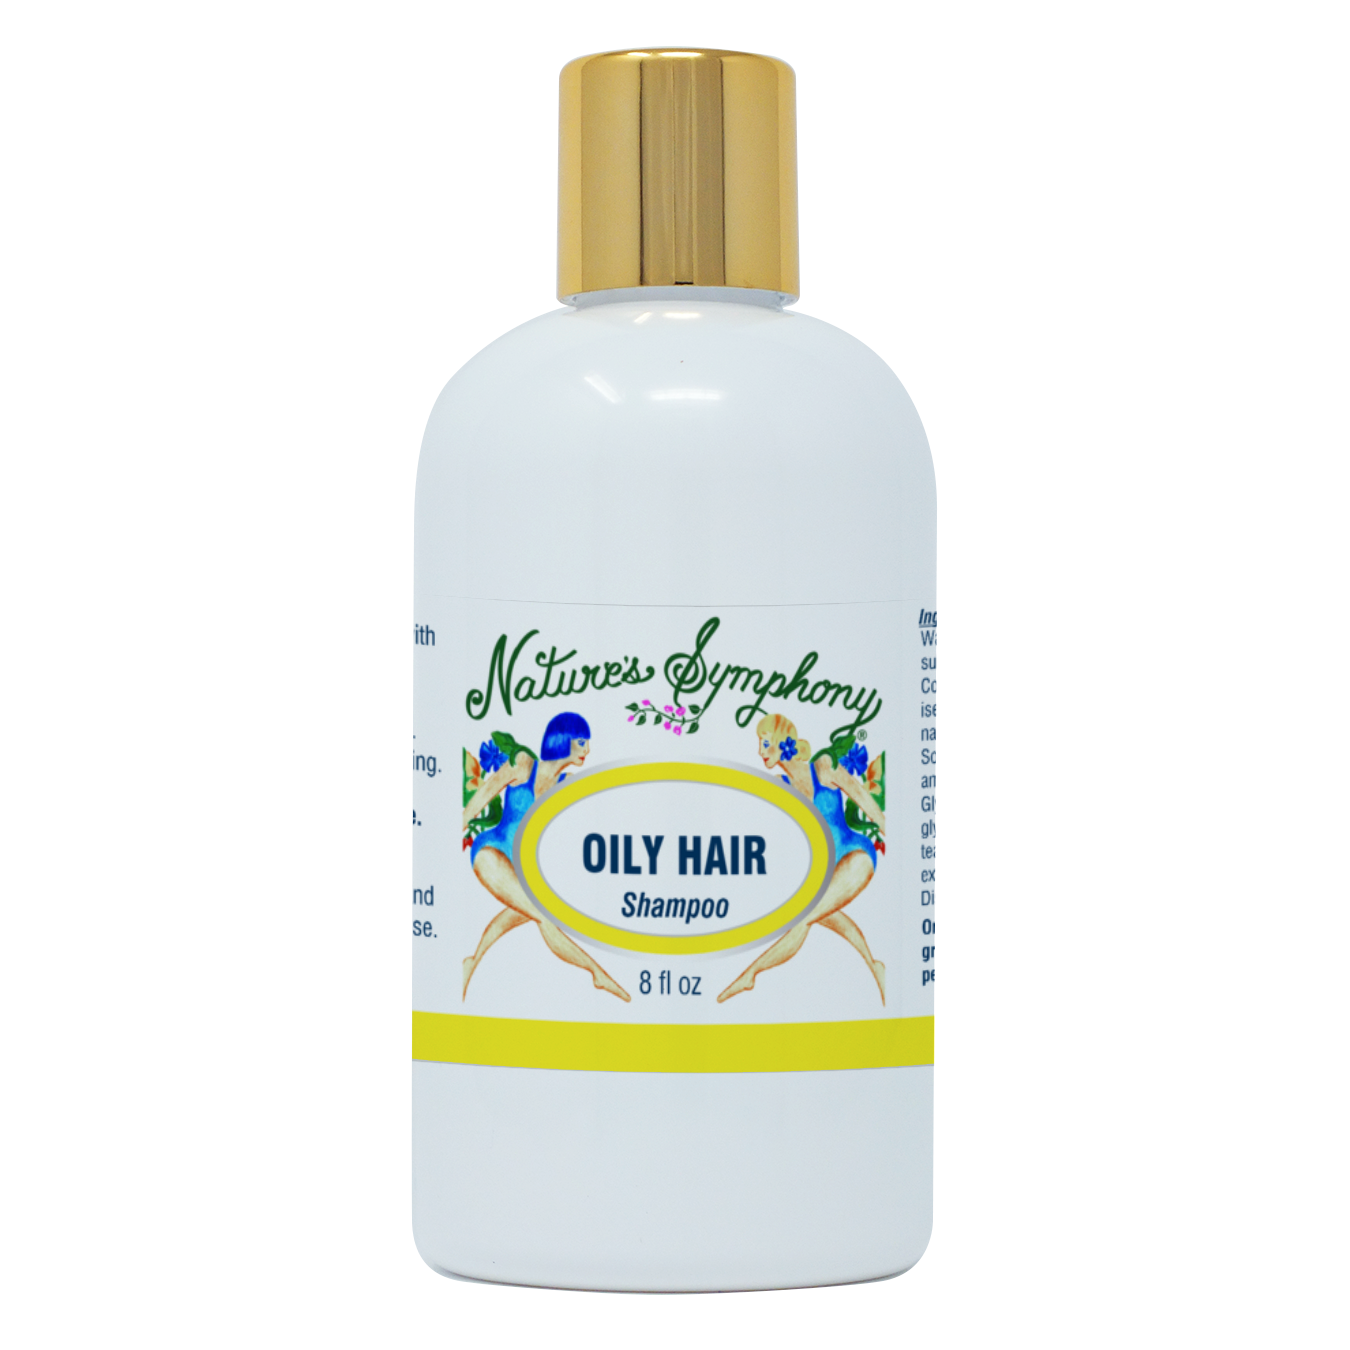 Oily Hair, Organic Shampoo - 8 fl. oz. (236ml)